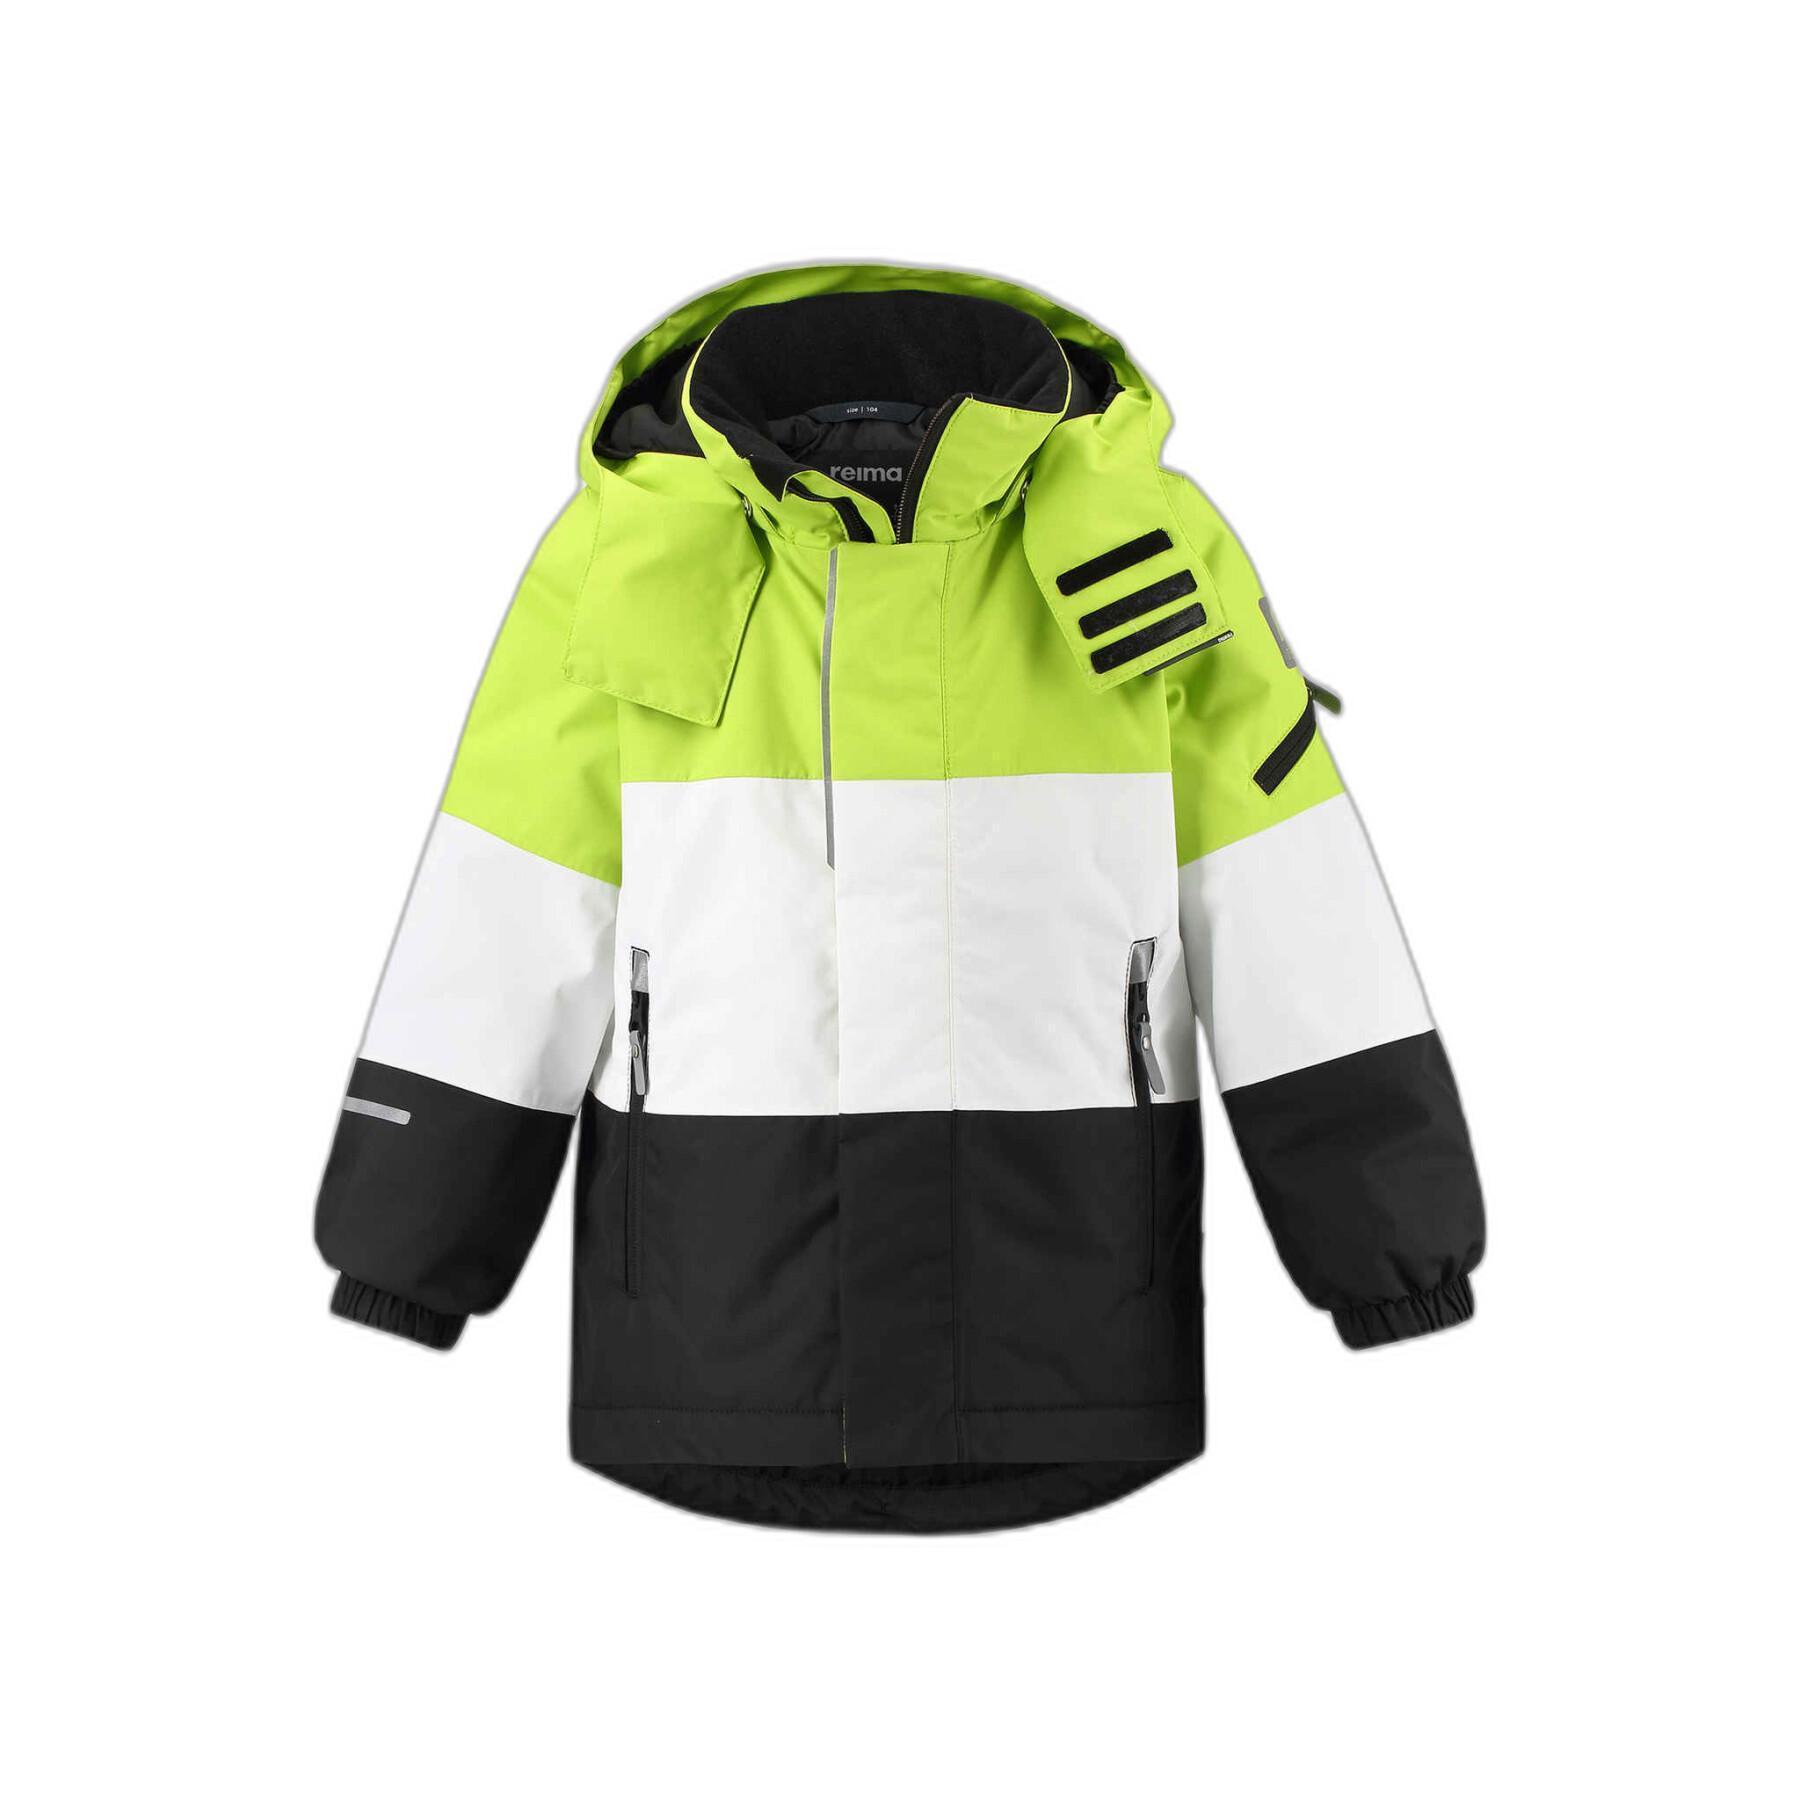 Waterproof winter jacket for kids Reima Reima tec Mountains